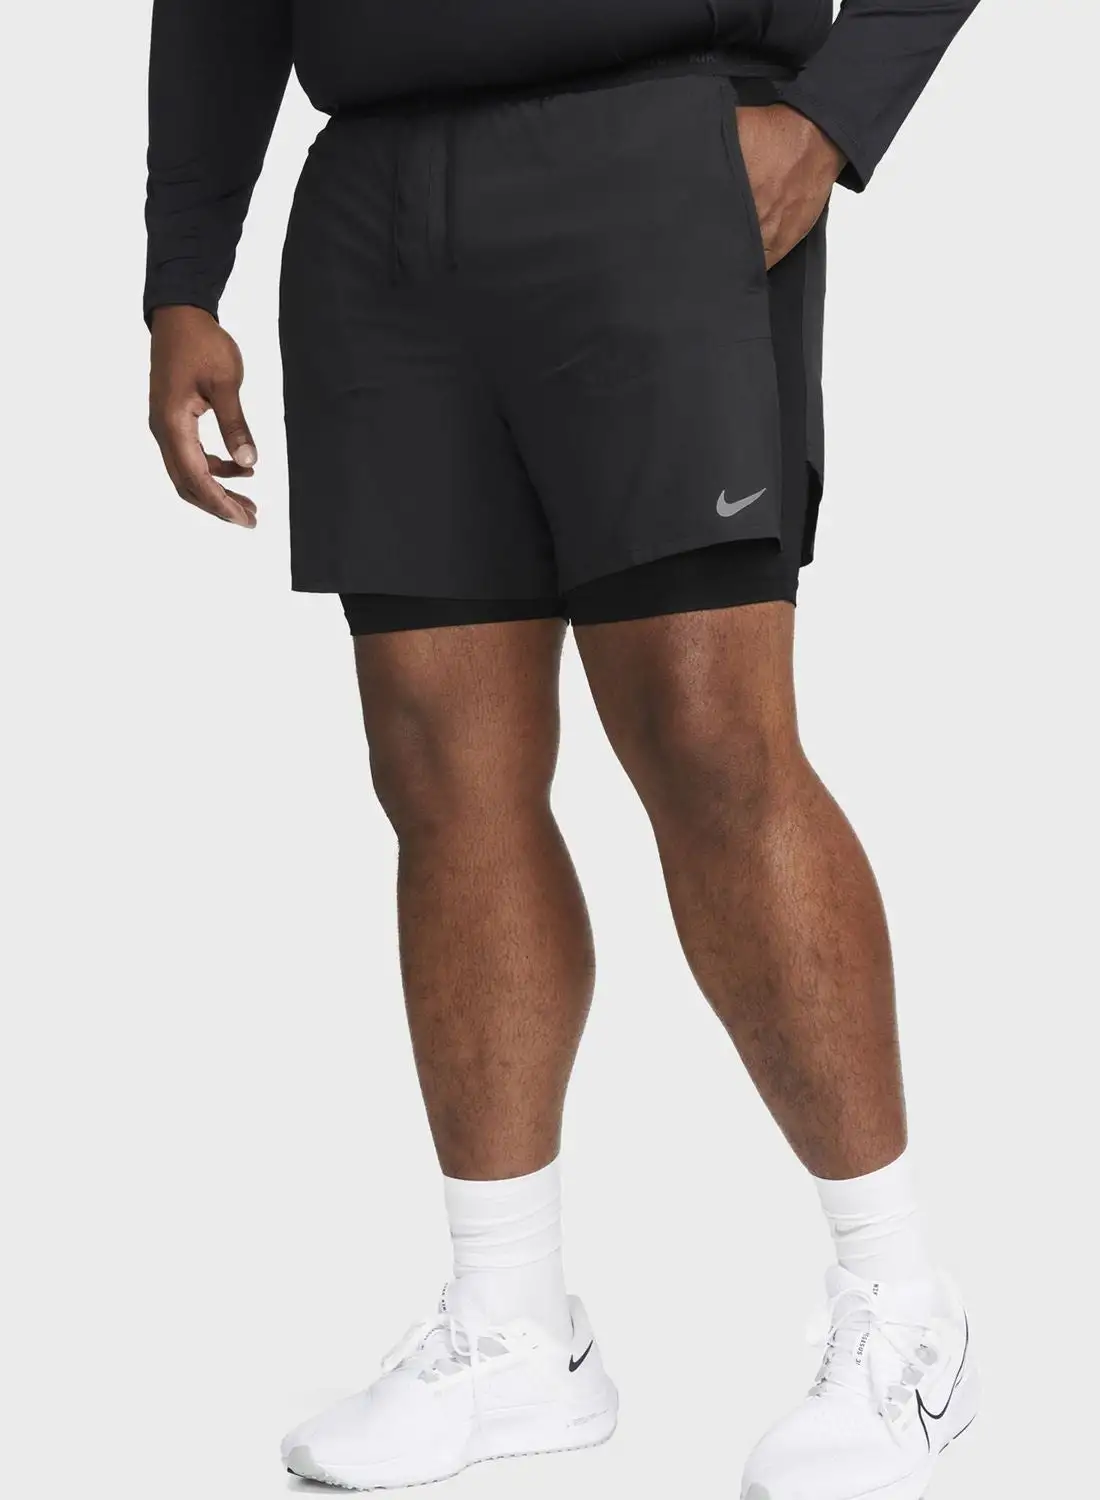 Nike Dri-Fit Stride Sin Hybrid Shorts